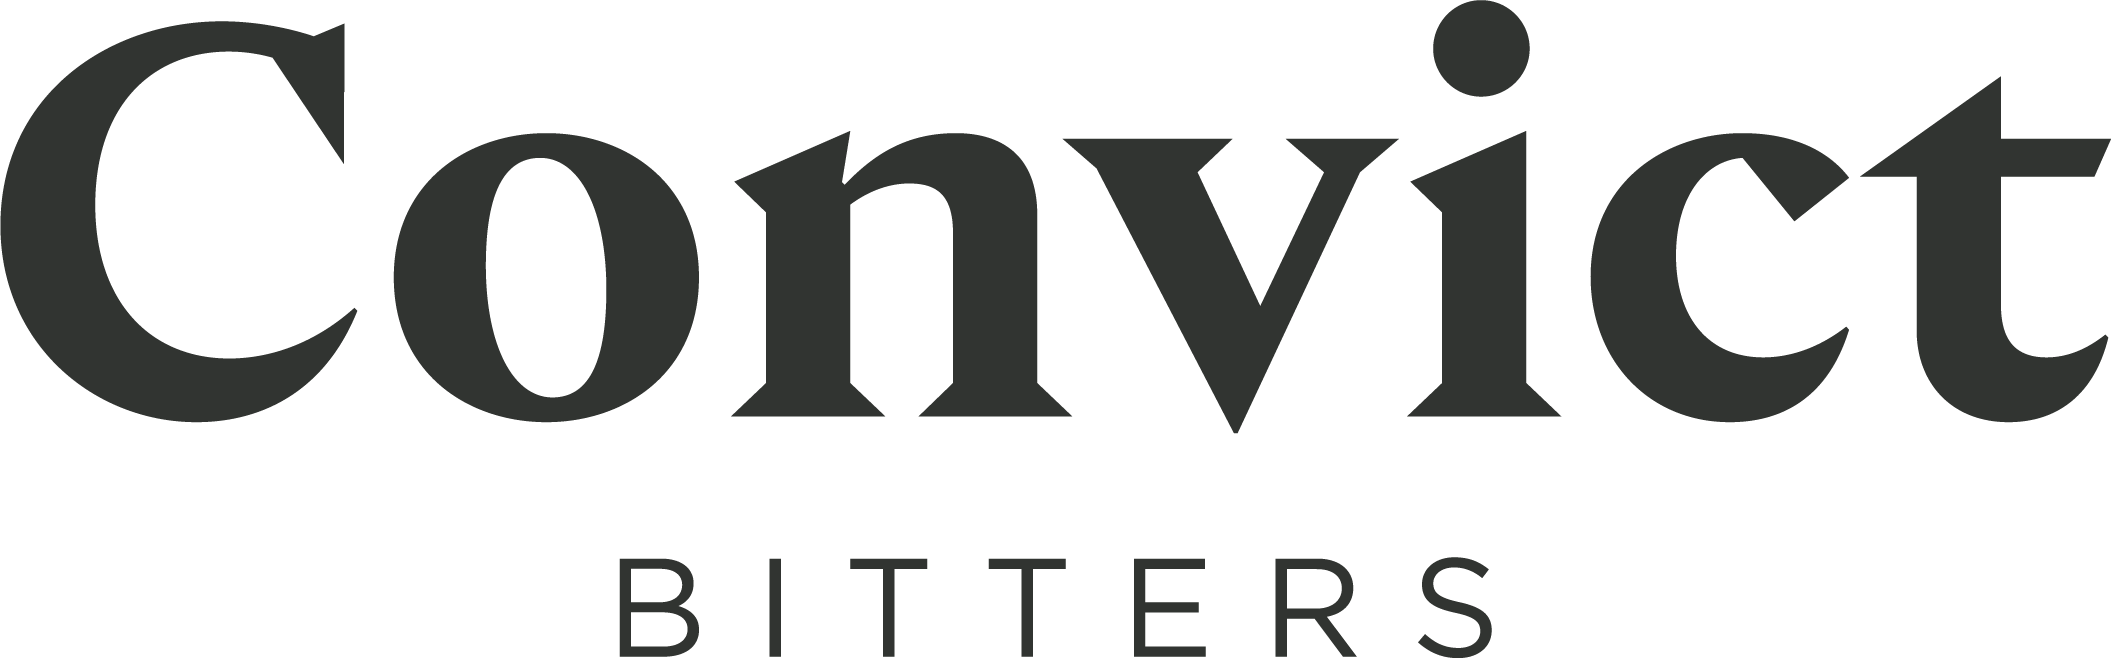 Convict Bitters_logo